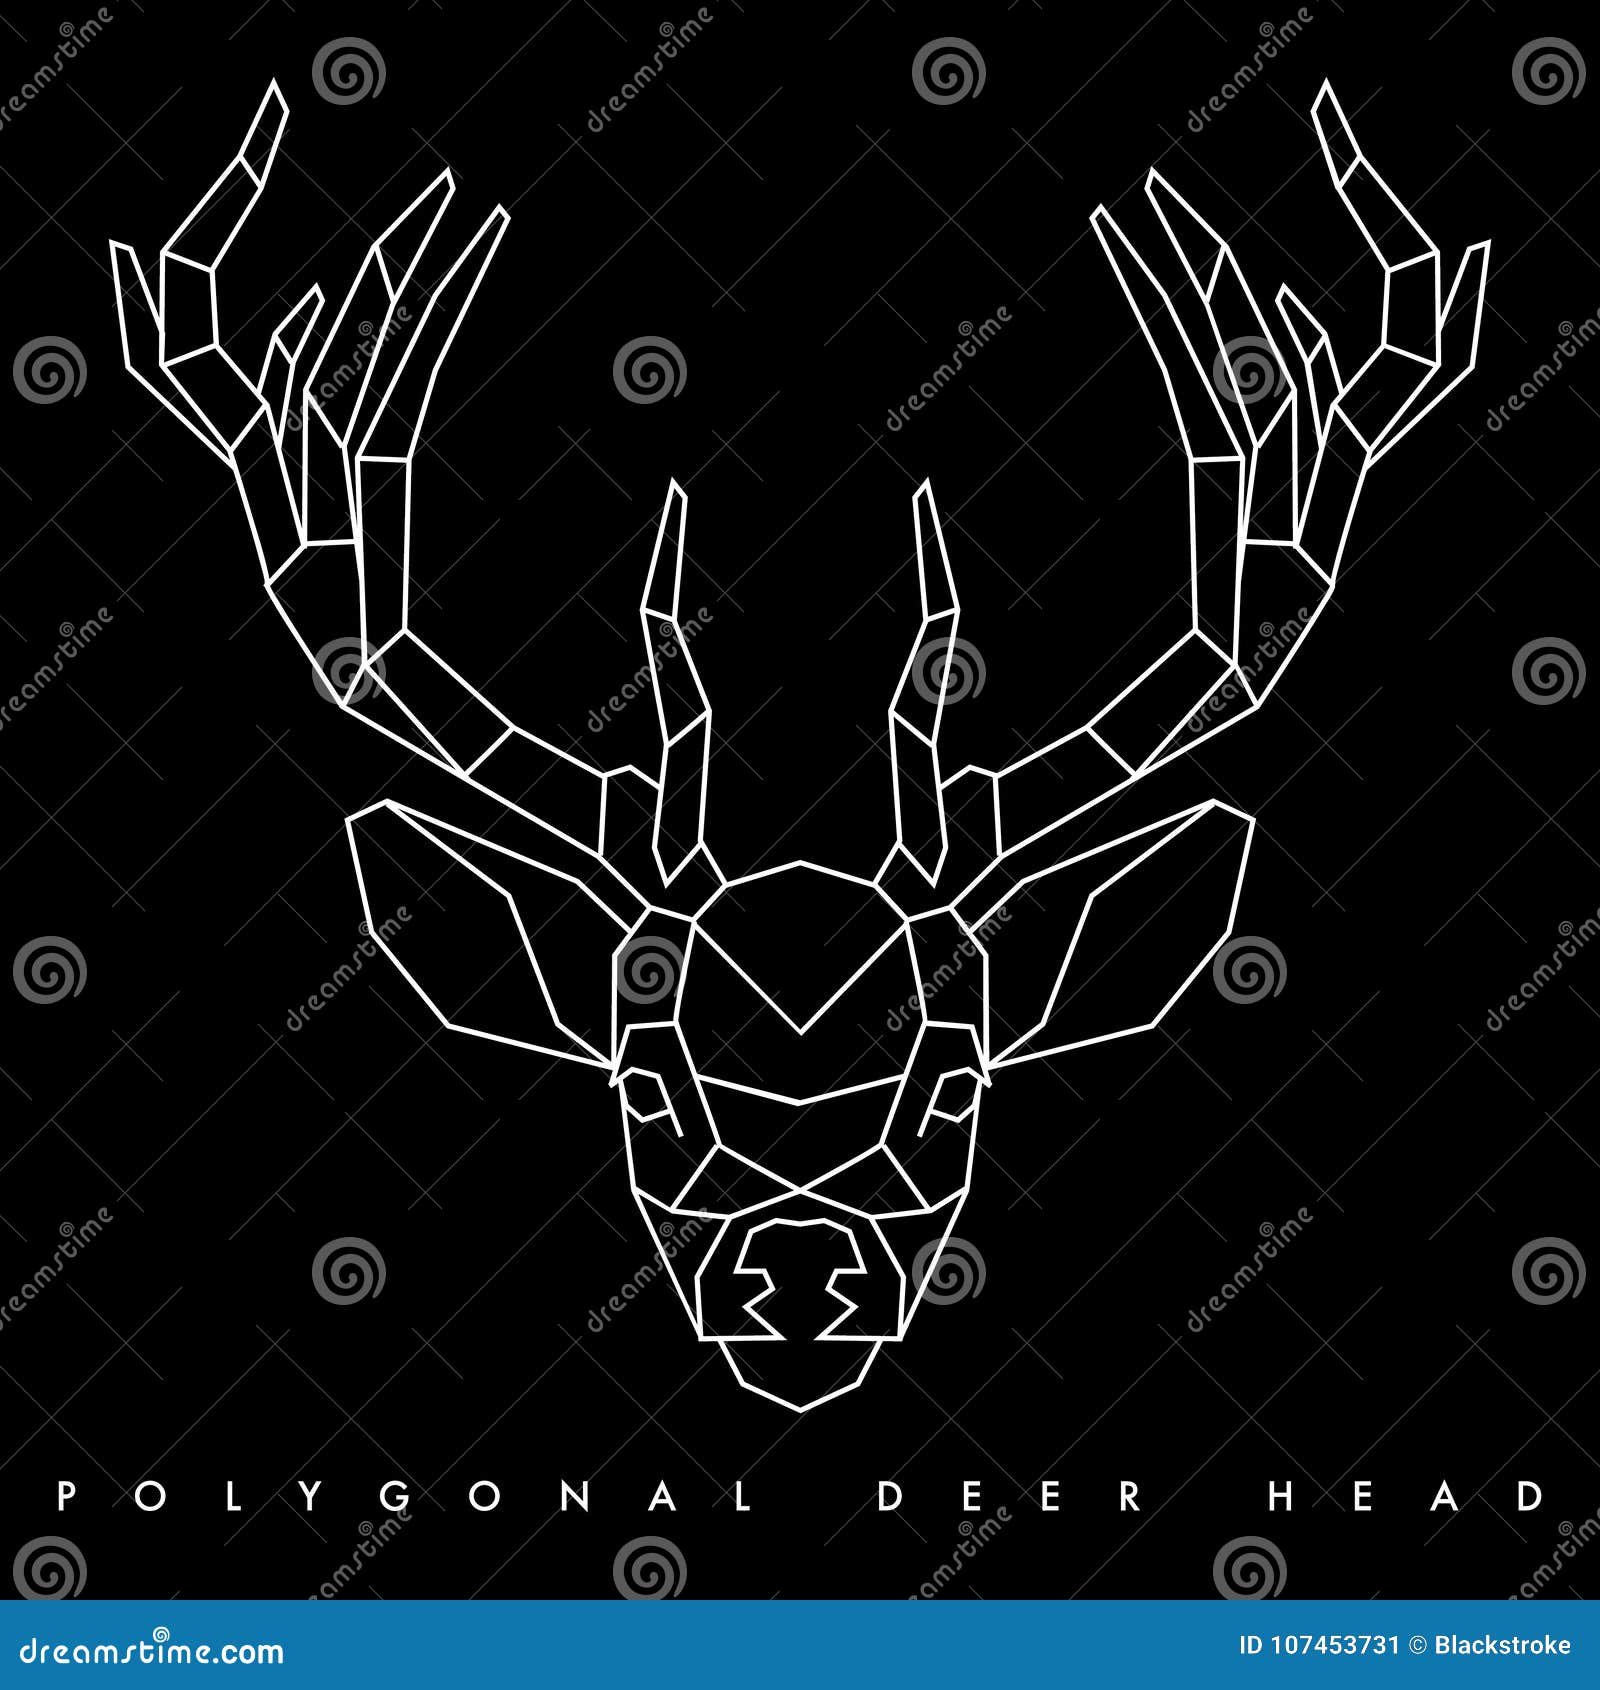 polygonal deer head  file Ã¢â¬â stock 